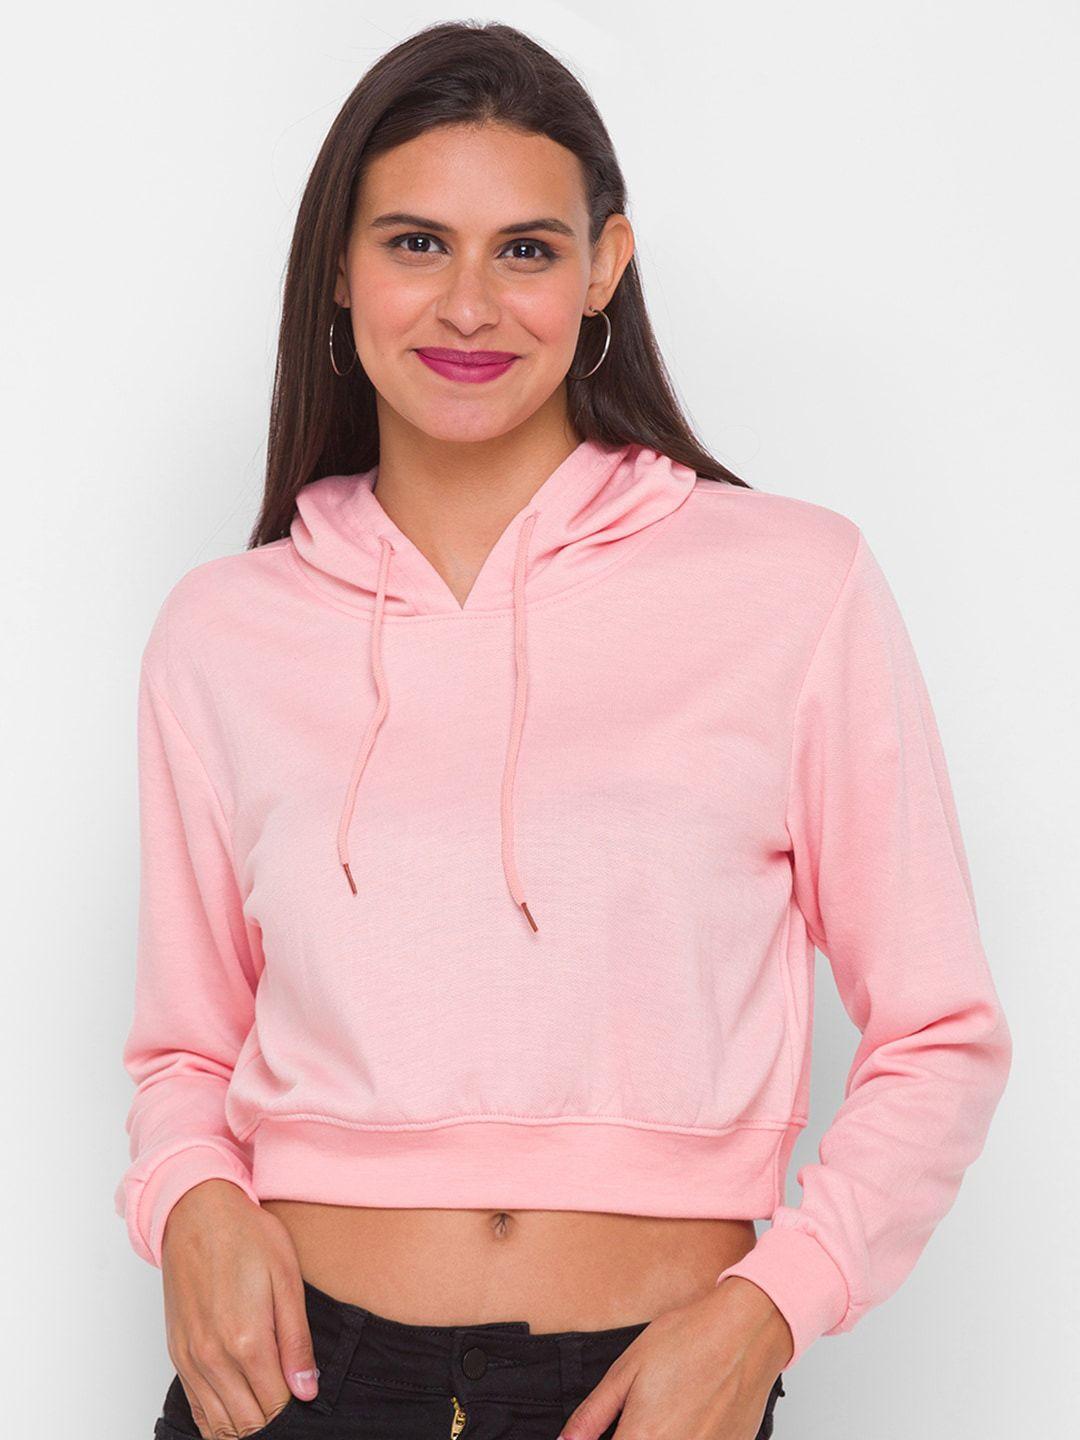 globus-woman-pink-hooded-sweatshirt